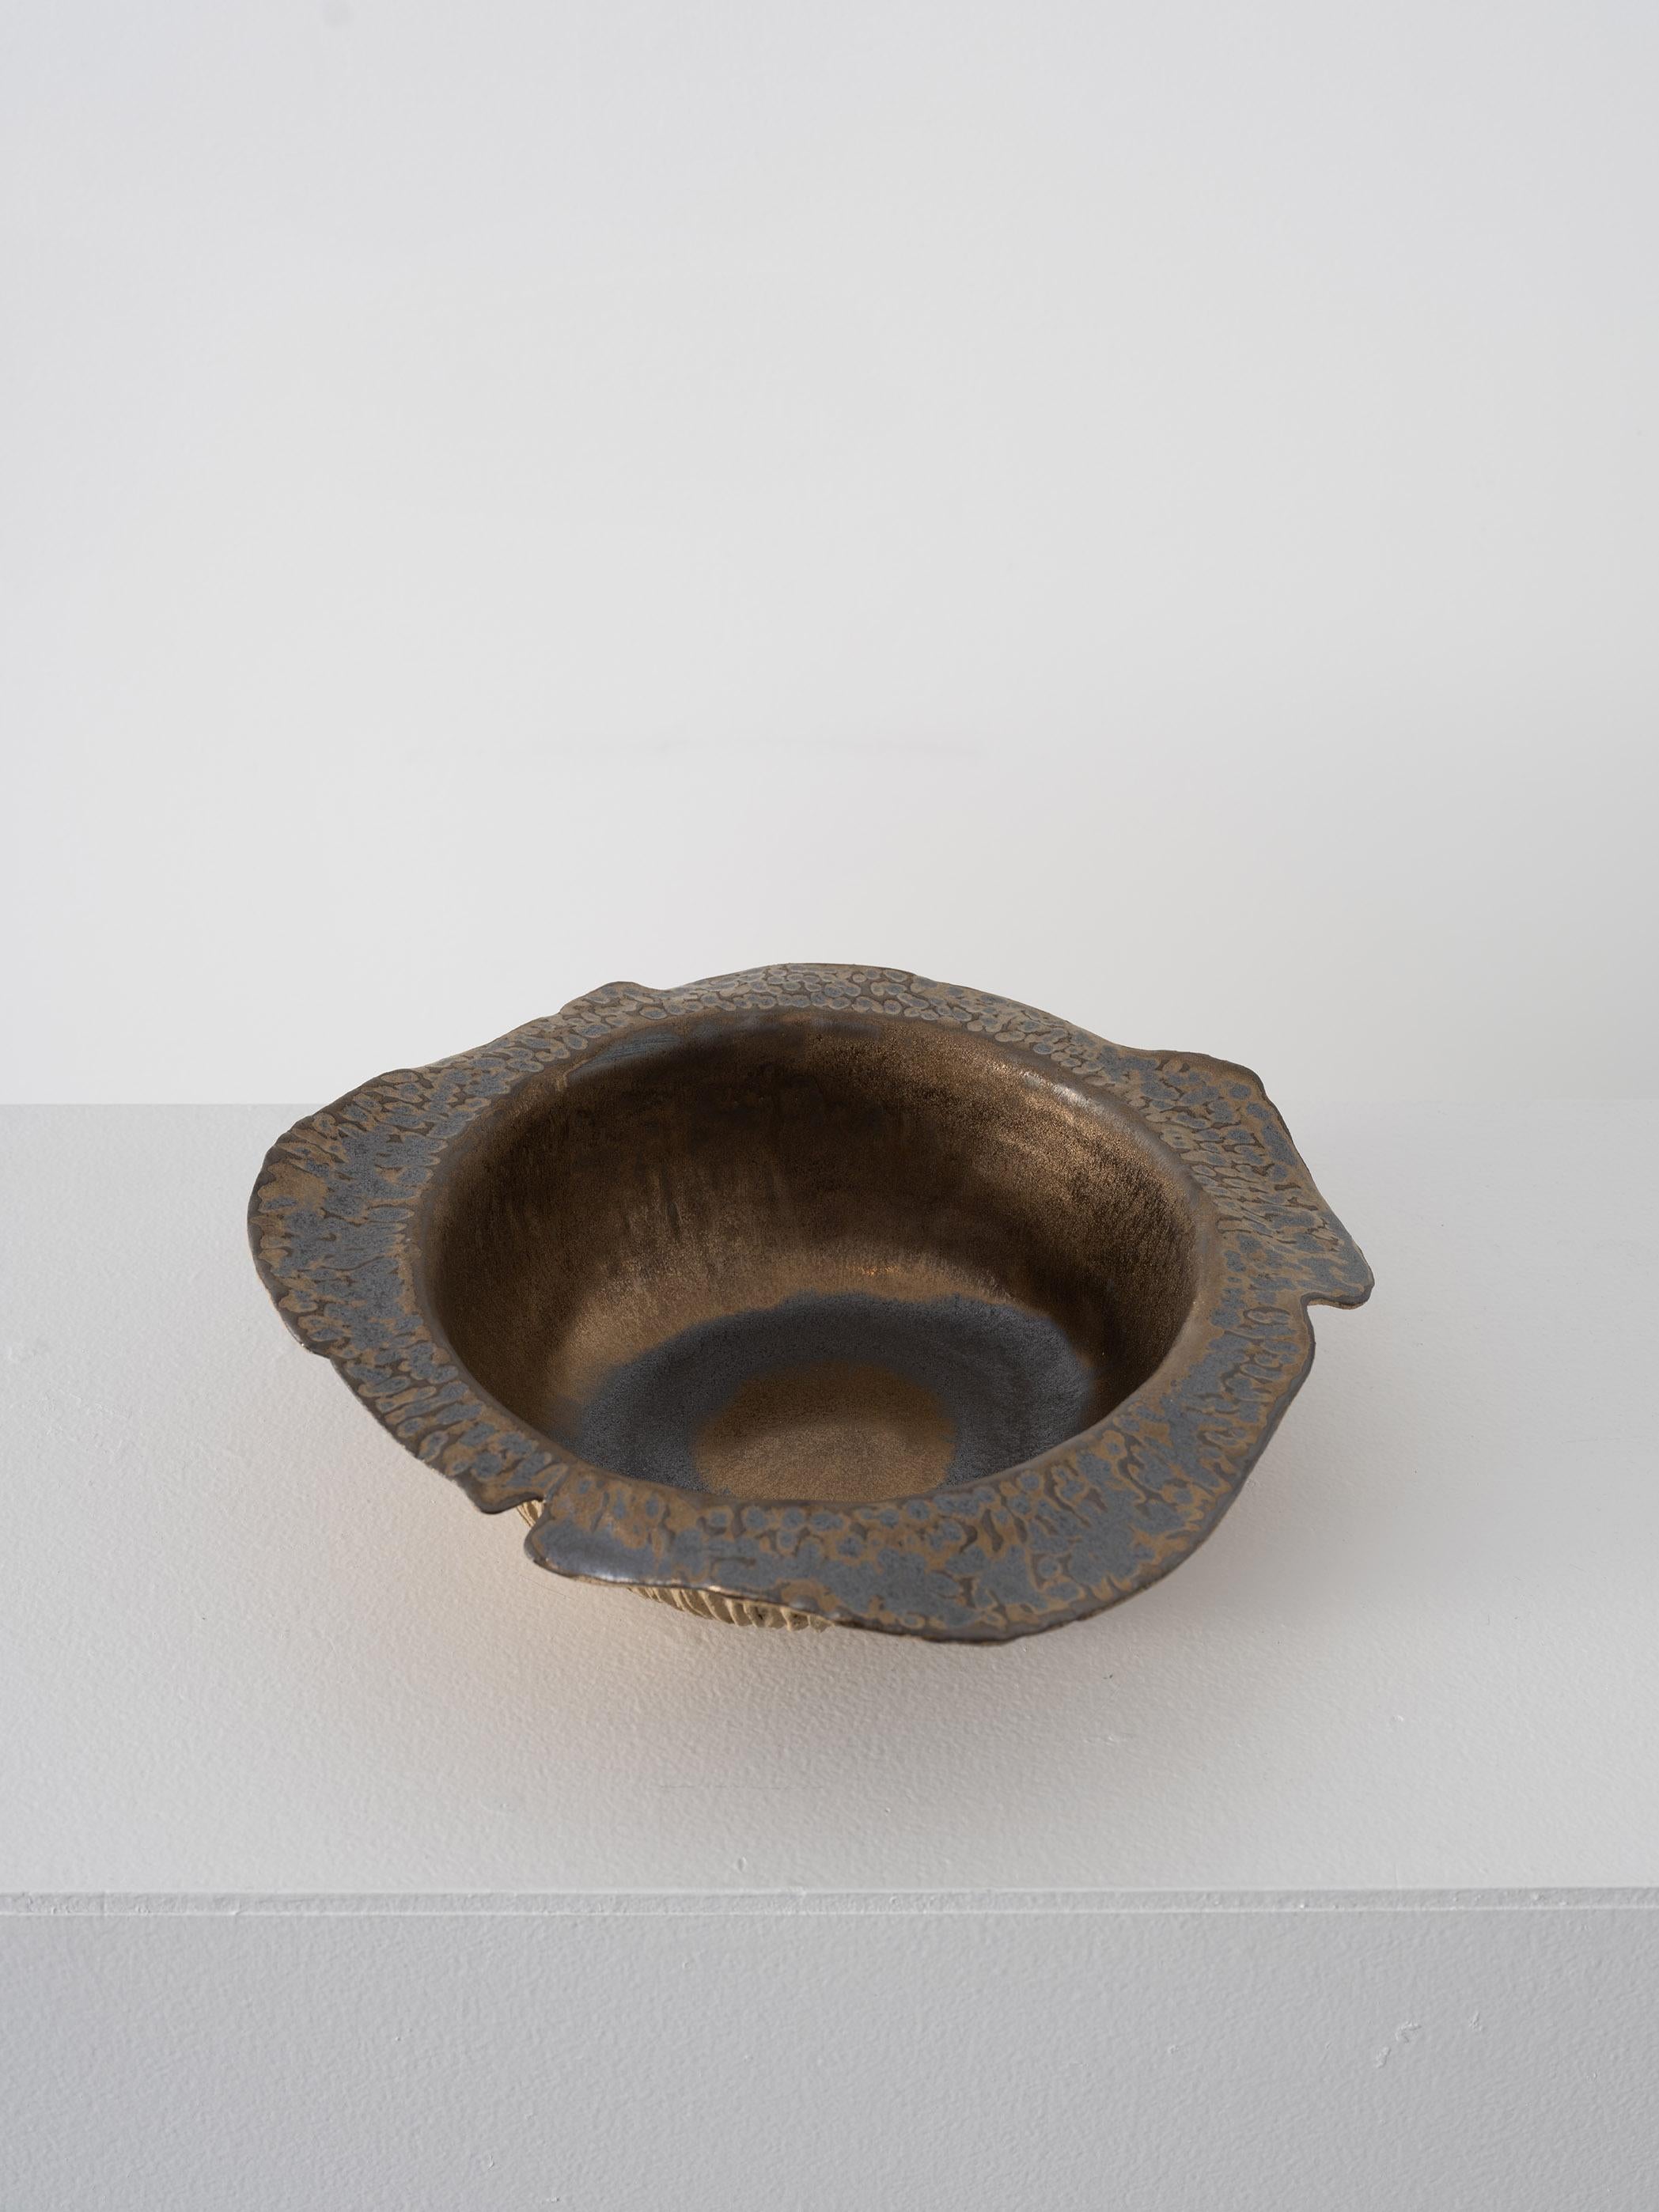 American Lilie Bowl in Metallic Glazed Ceramic by Trish DeMasi For Sale